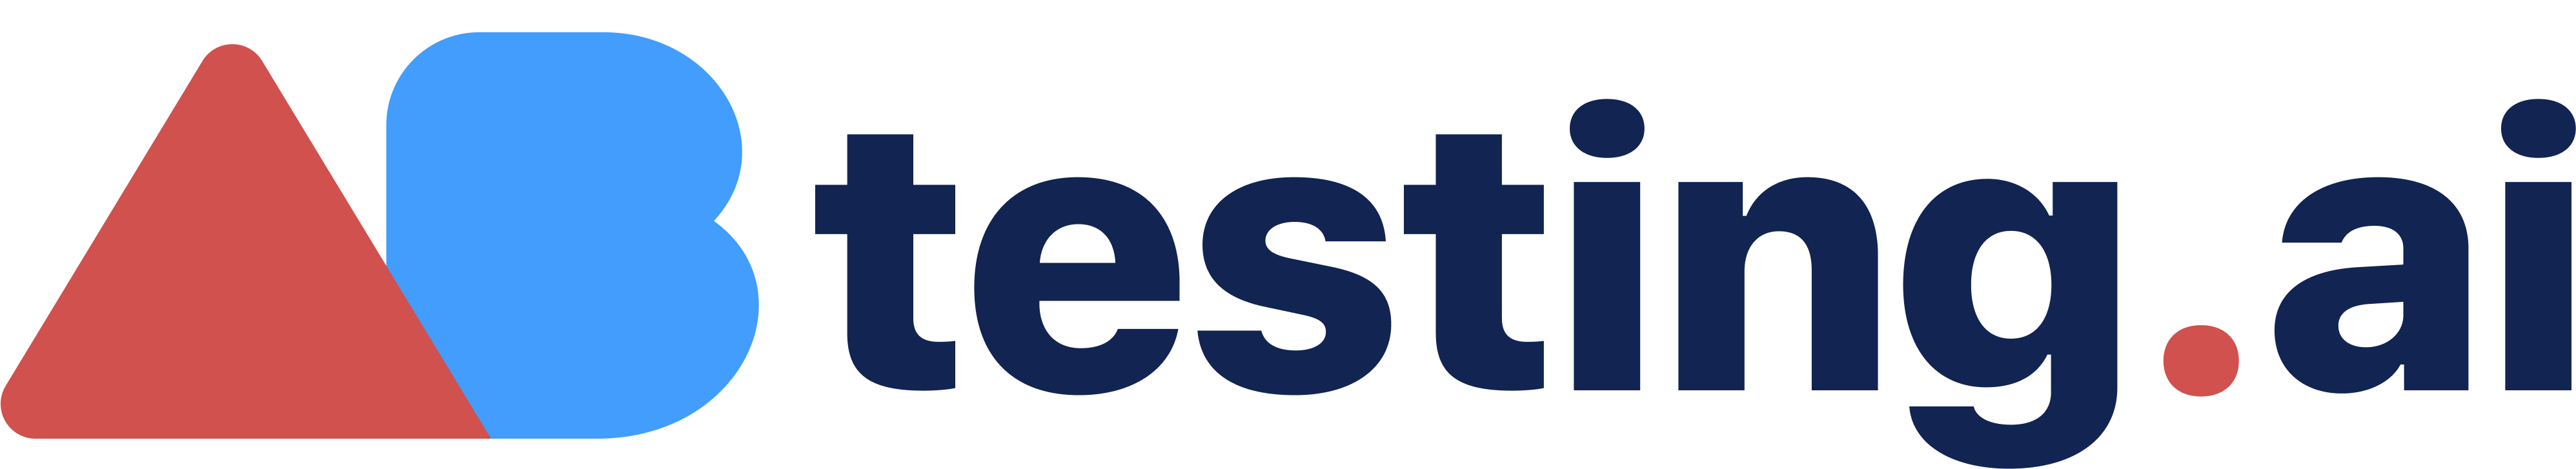 ABtesting-logo